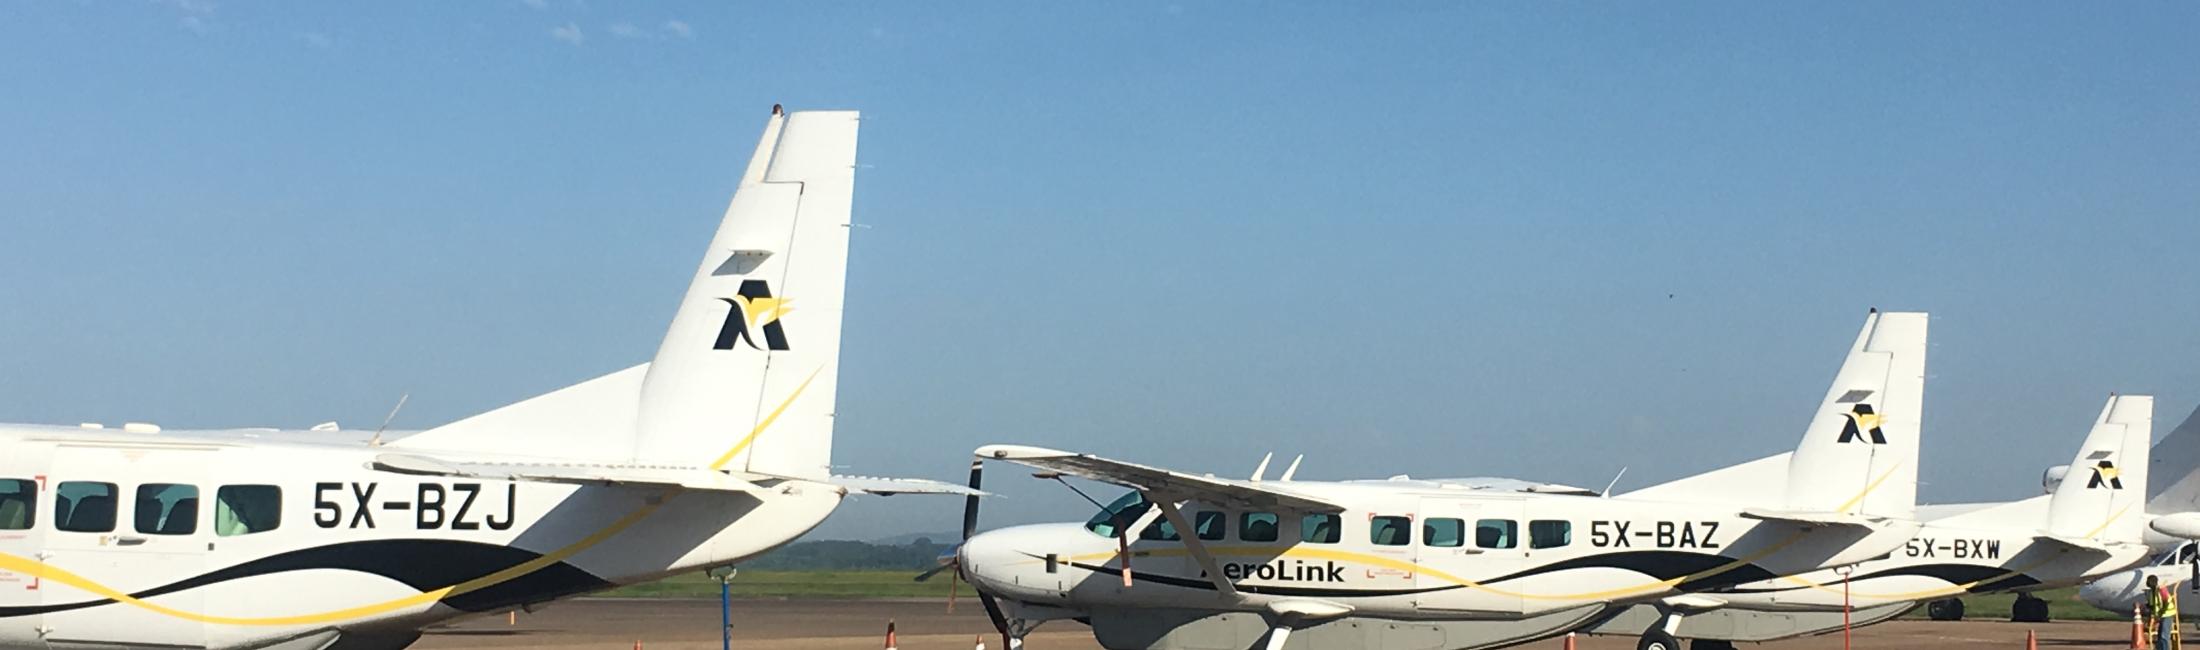 3 Aerolink aircrafrts Entebbe Airport (Uganda)